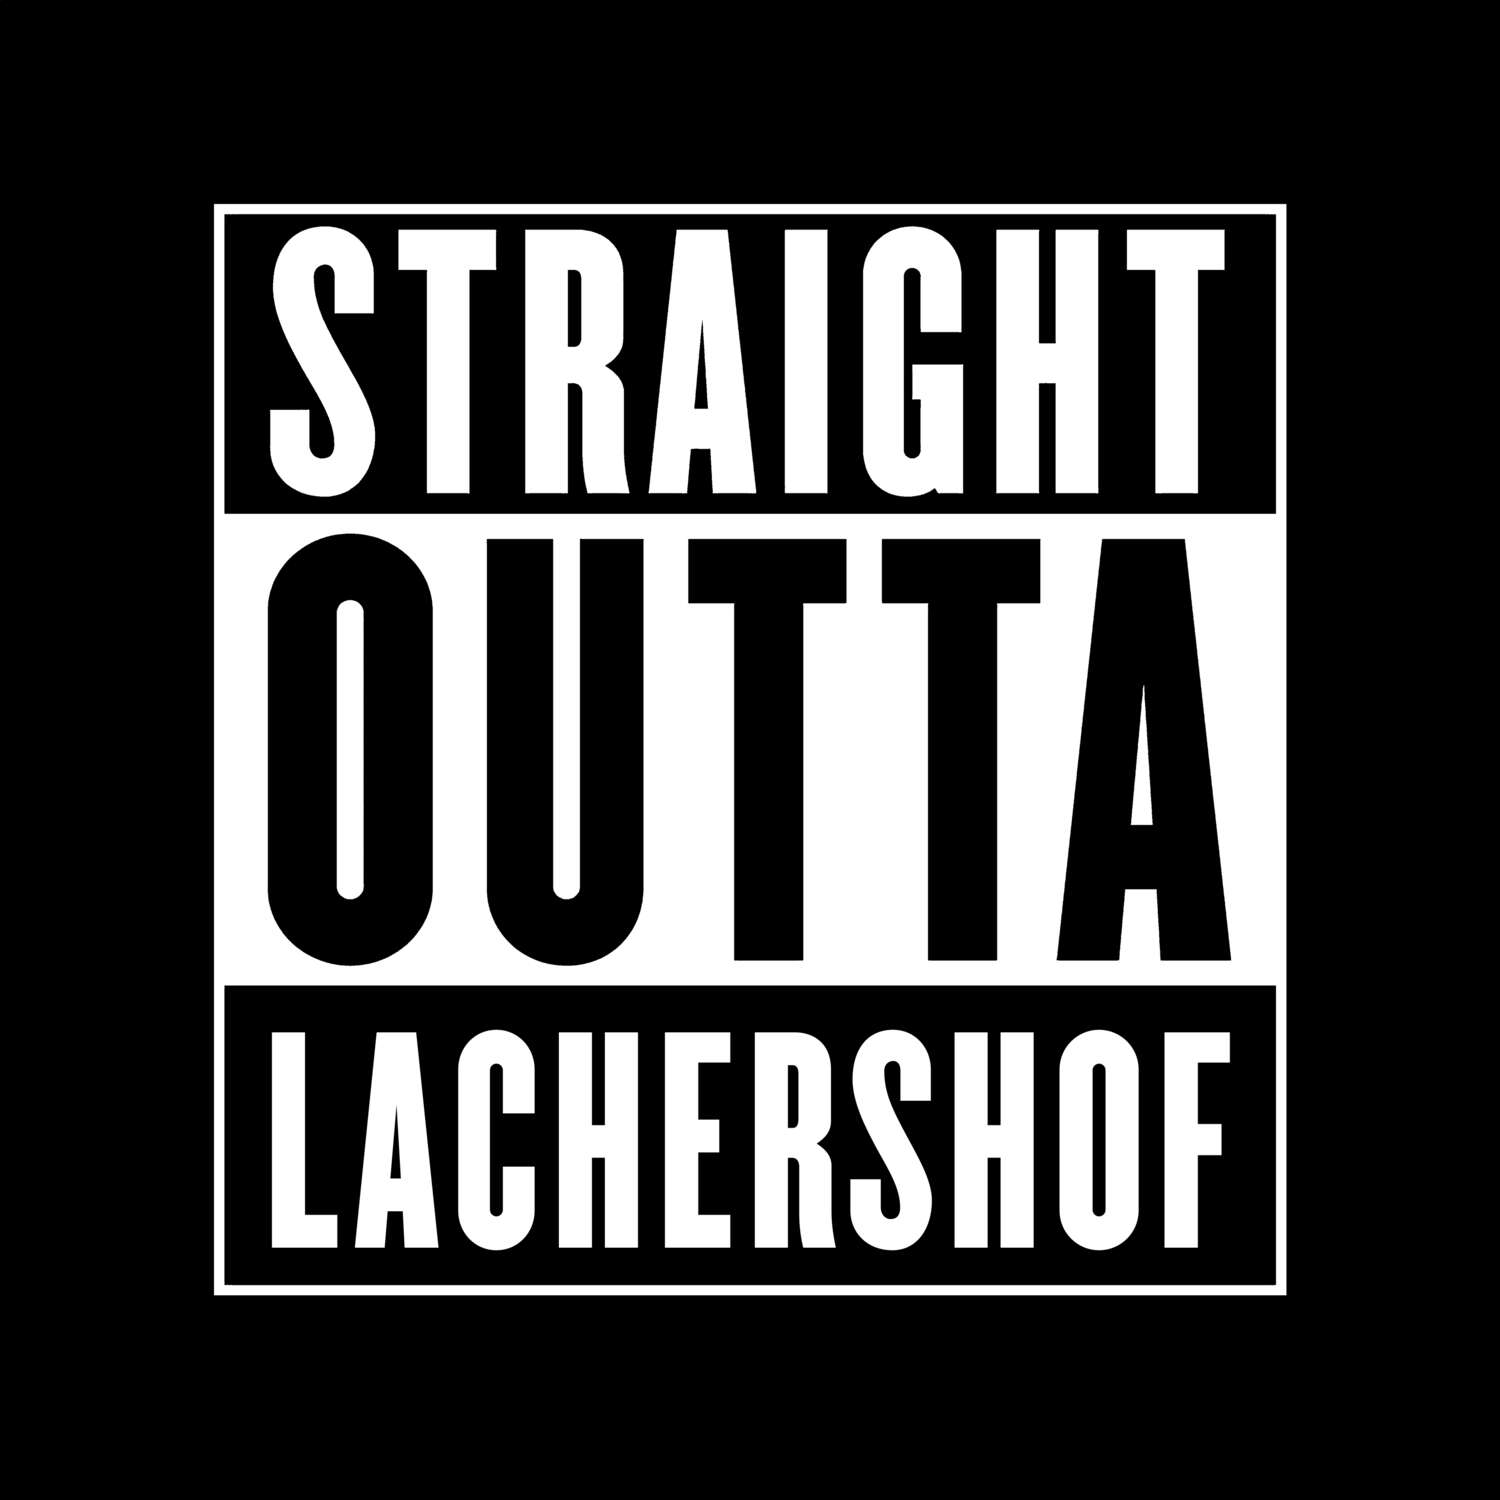 Lachershof T-Shirt »Straight Outta«